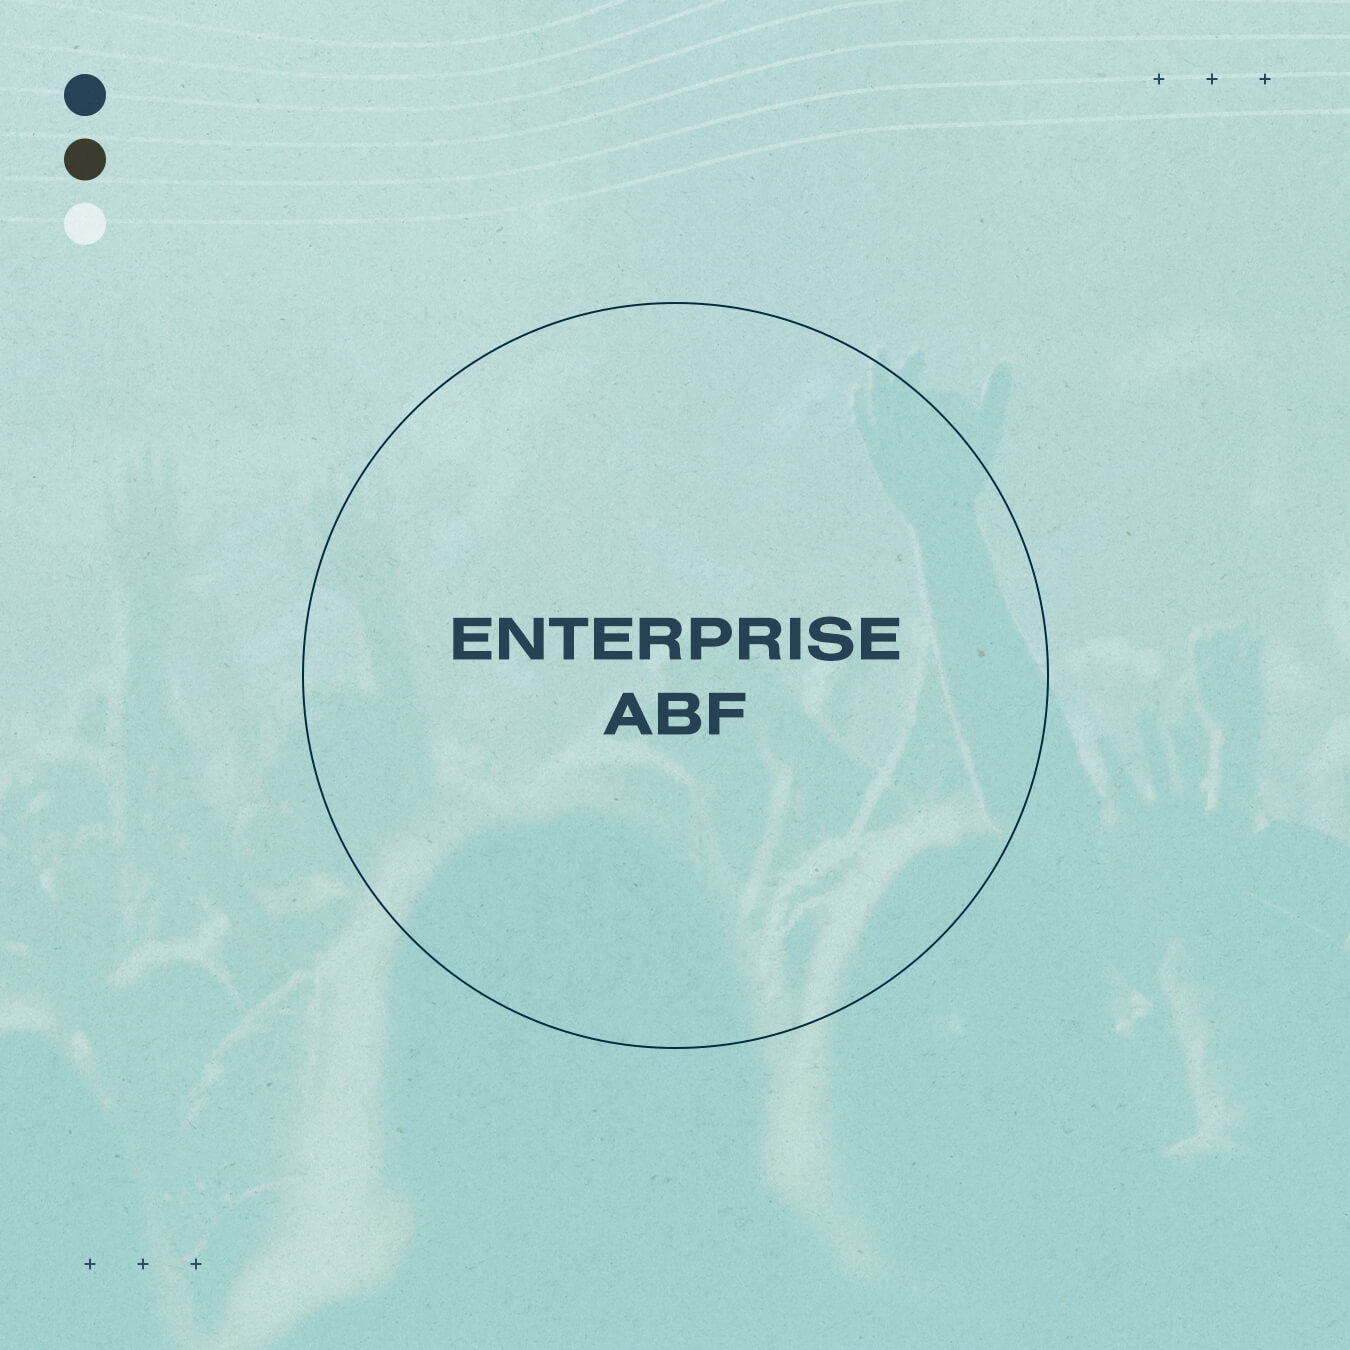 Enterprise ABF image